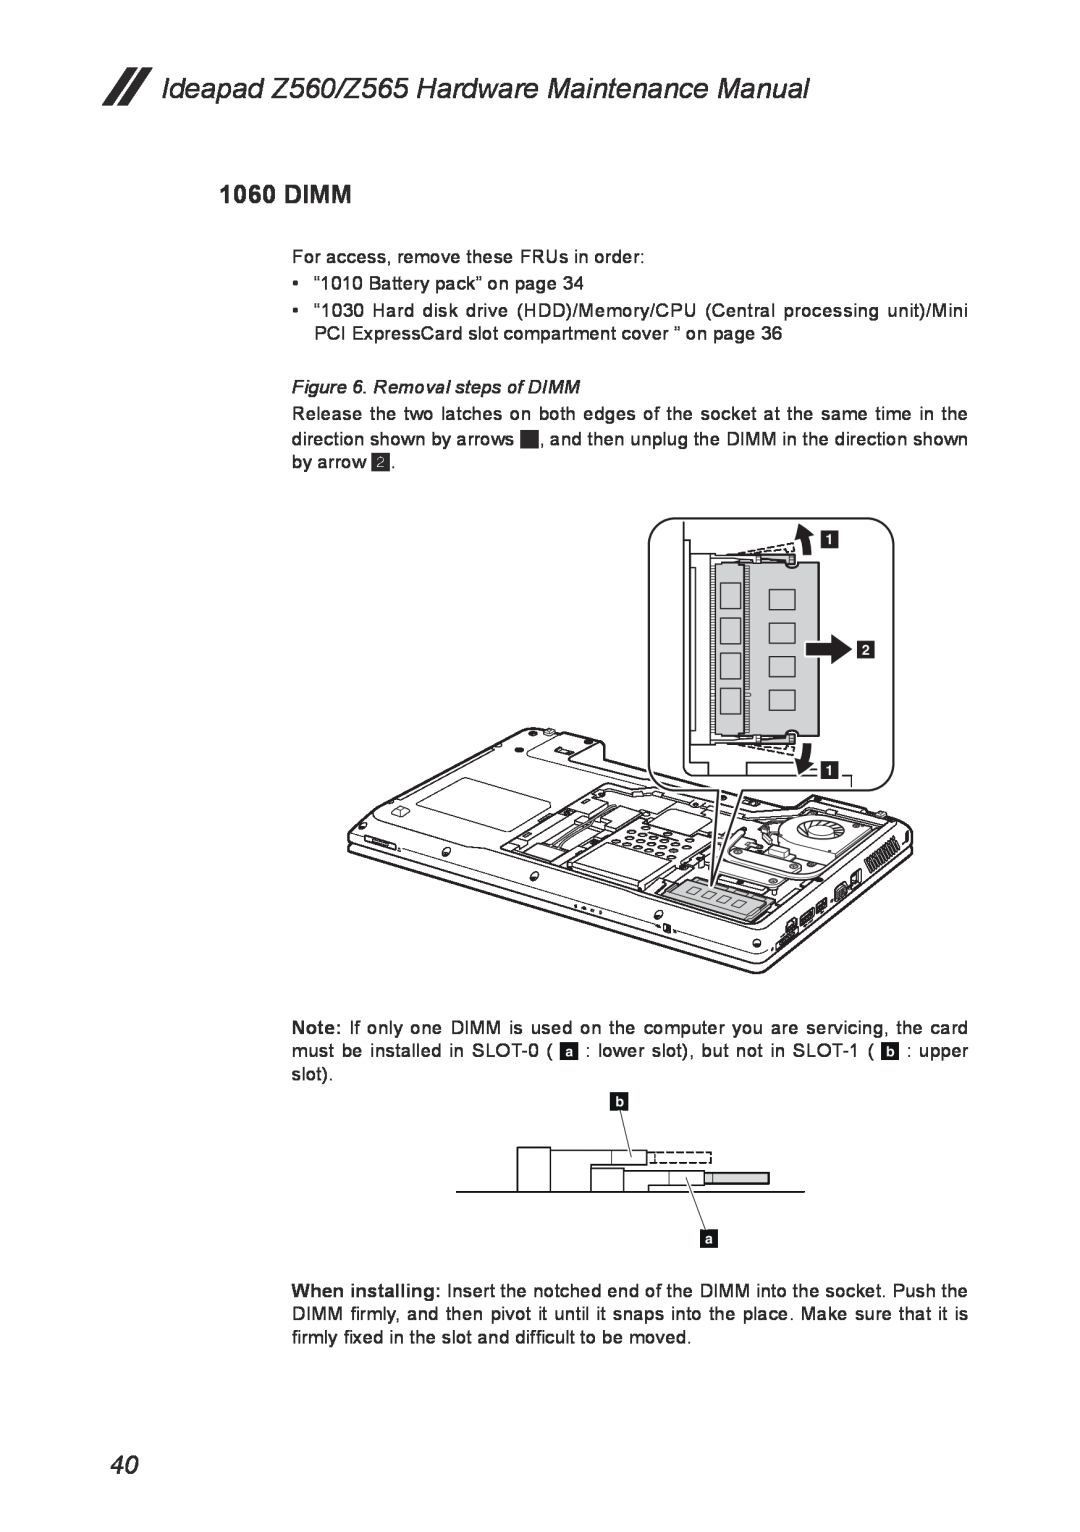 Lenovo manual Dimm, Removal steps of DIMM, Ideapad Z560/Z565 Hardware Maintenance Manual 